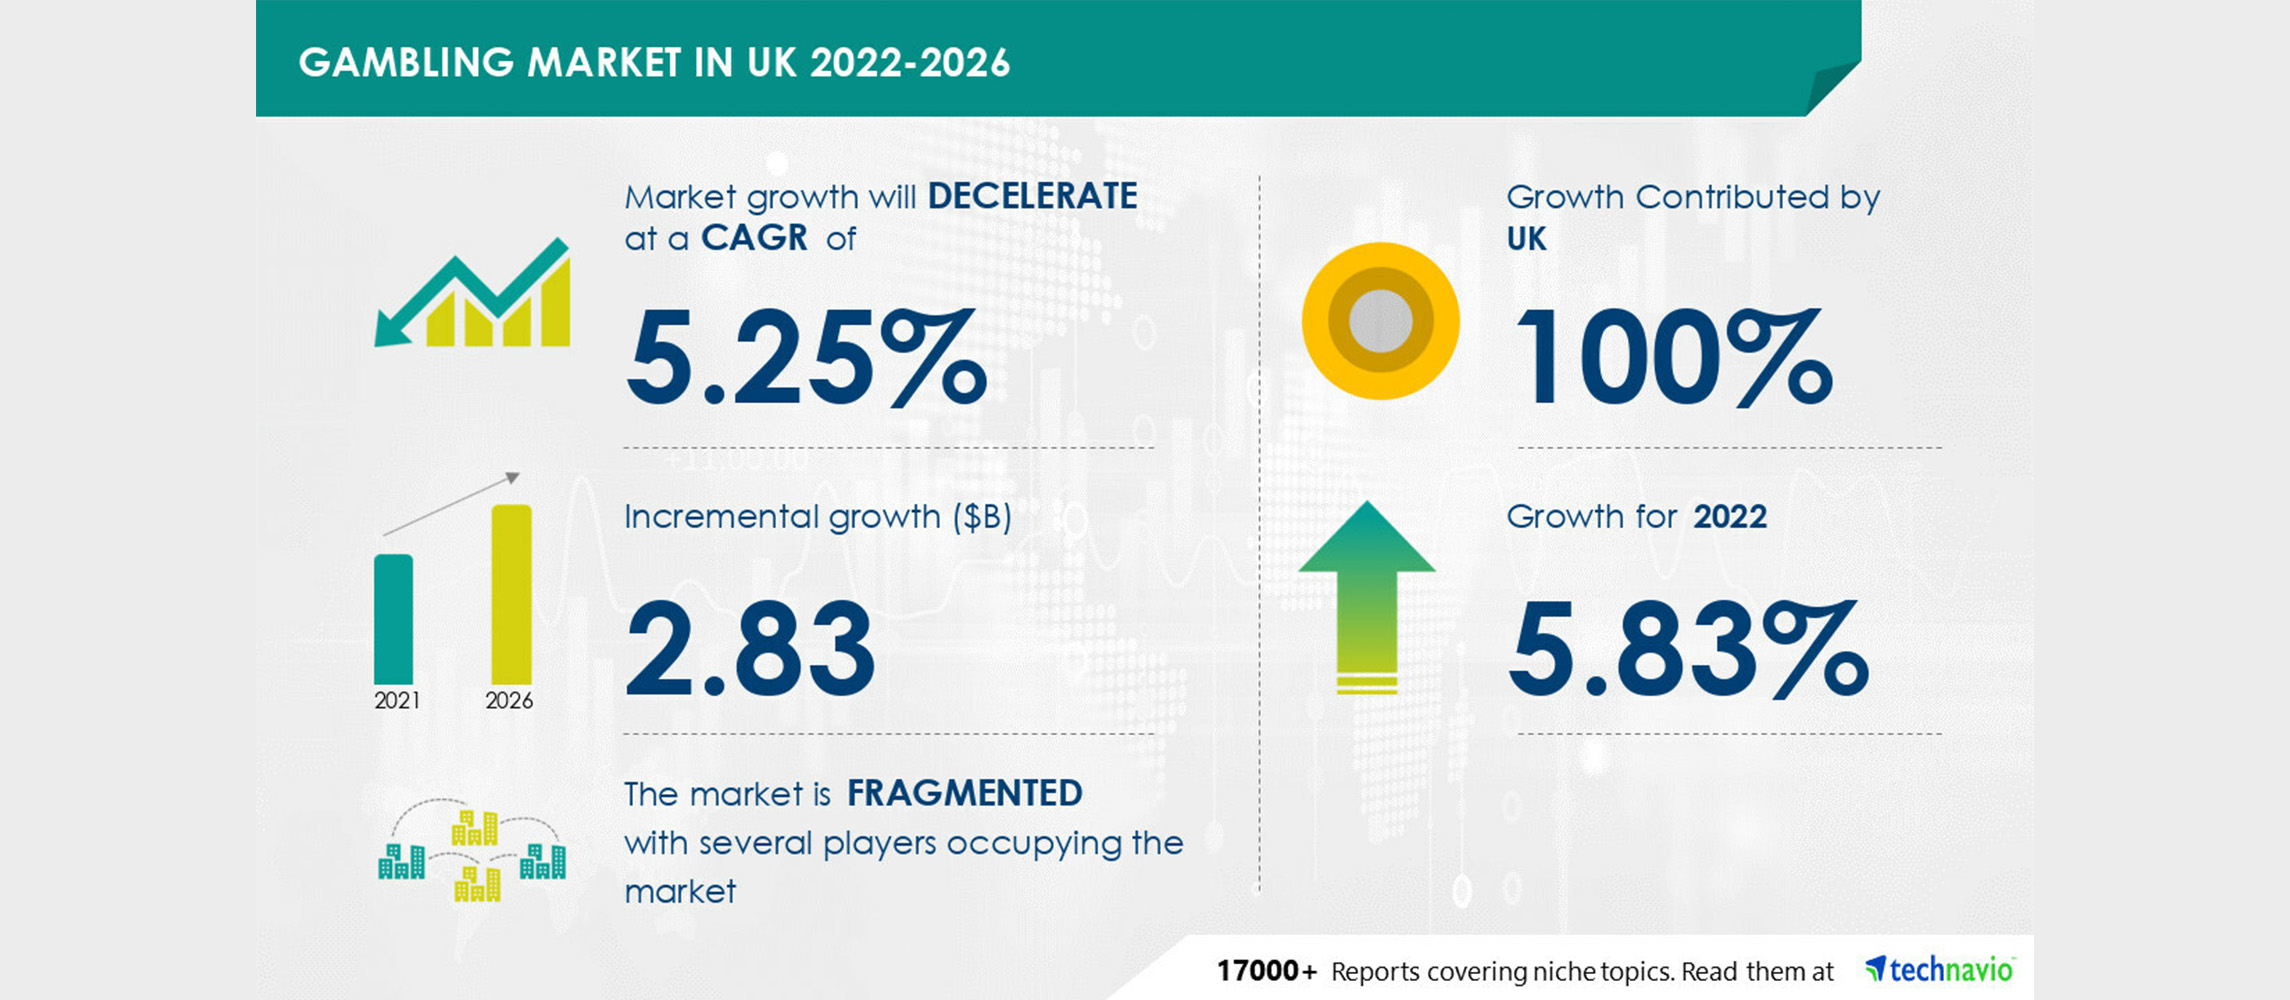 Gambling Market in UK Growth Forecast 2022-2026